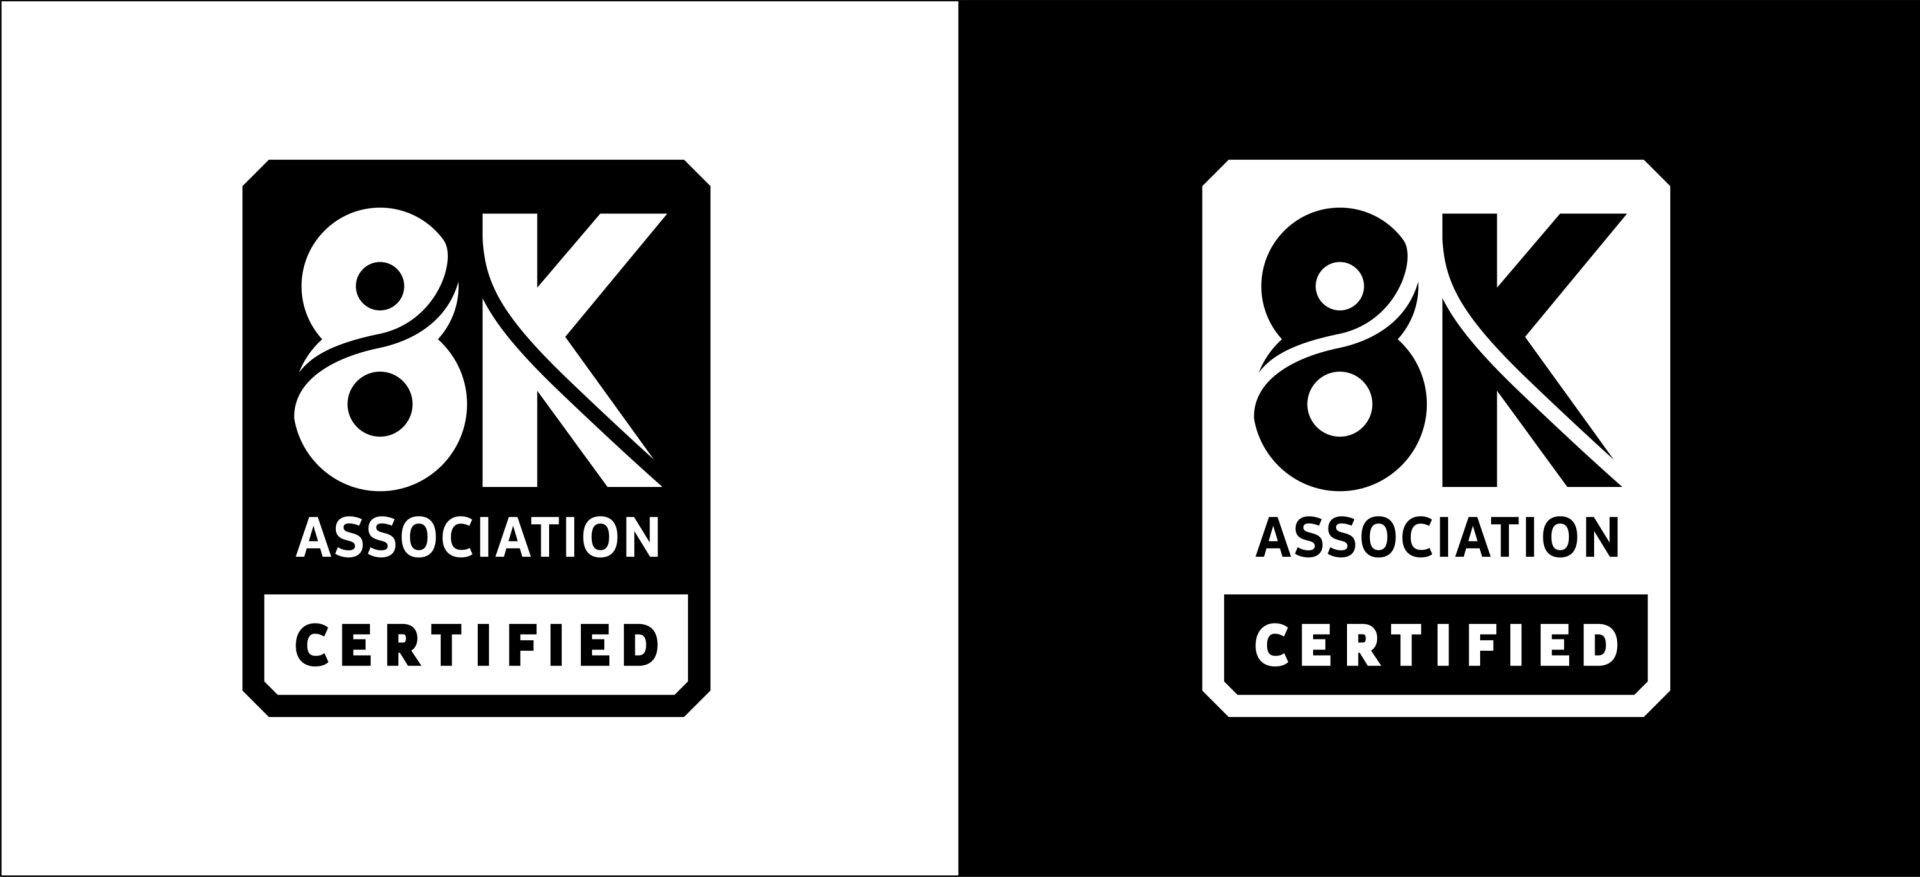 8K-Association-Certified